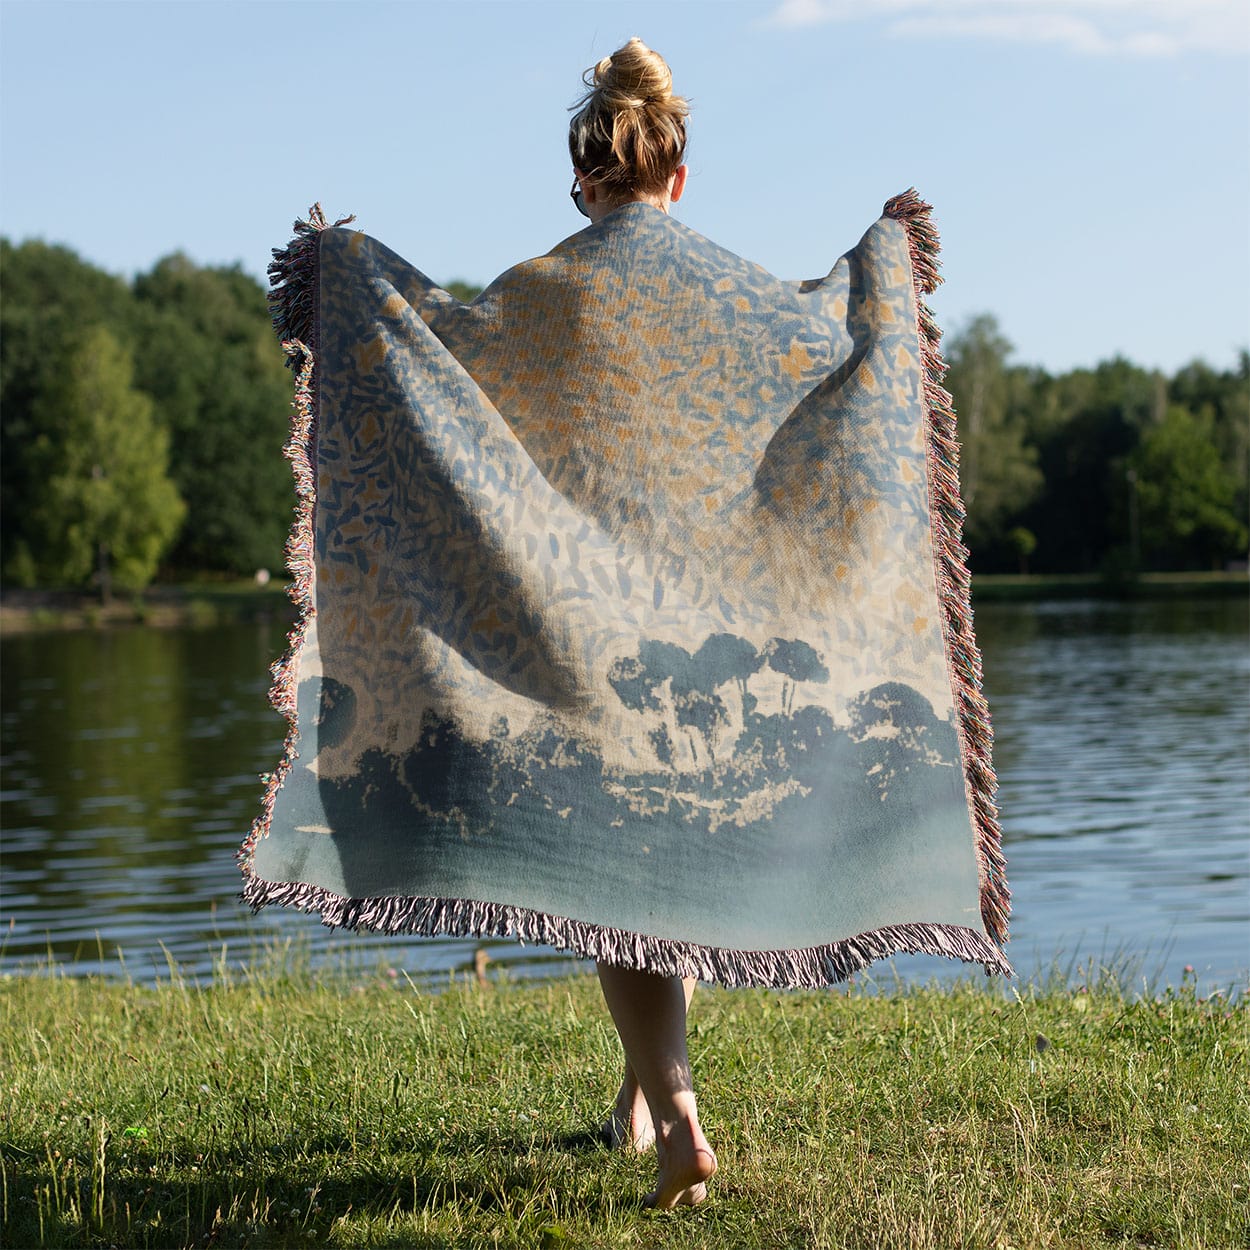 Starry Sky Woven Blanket Held on a Woman's Back Outside